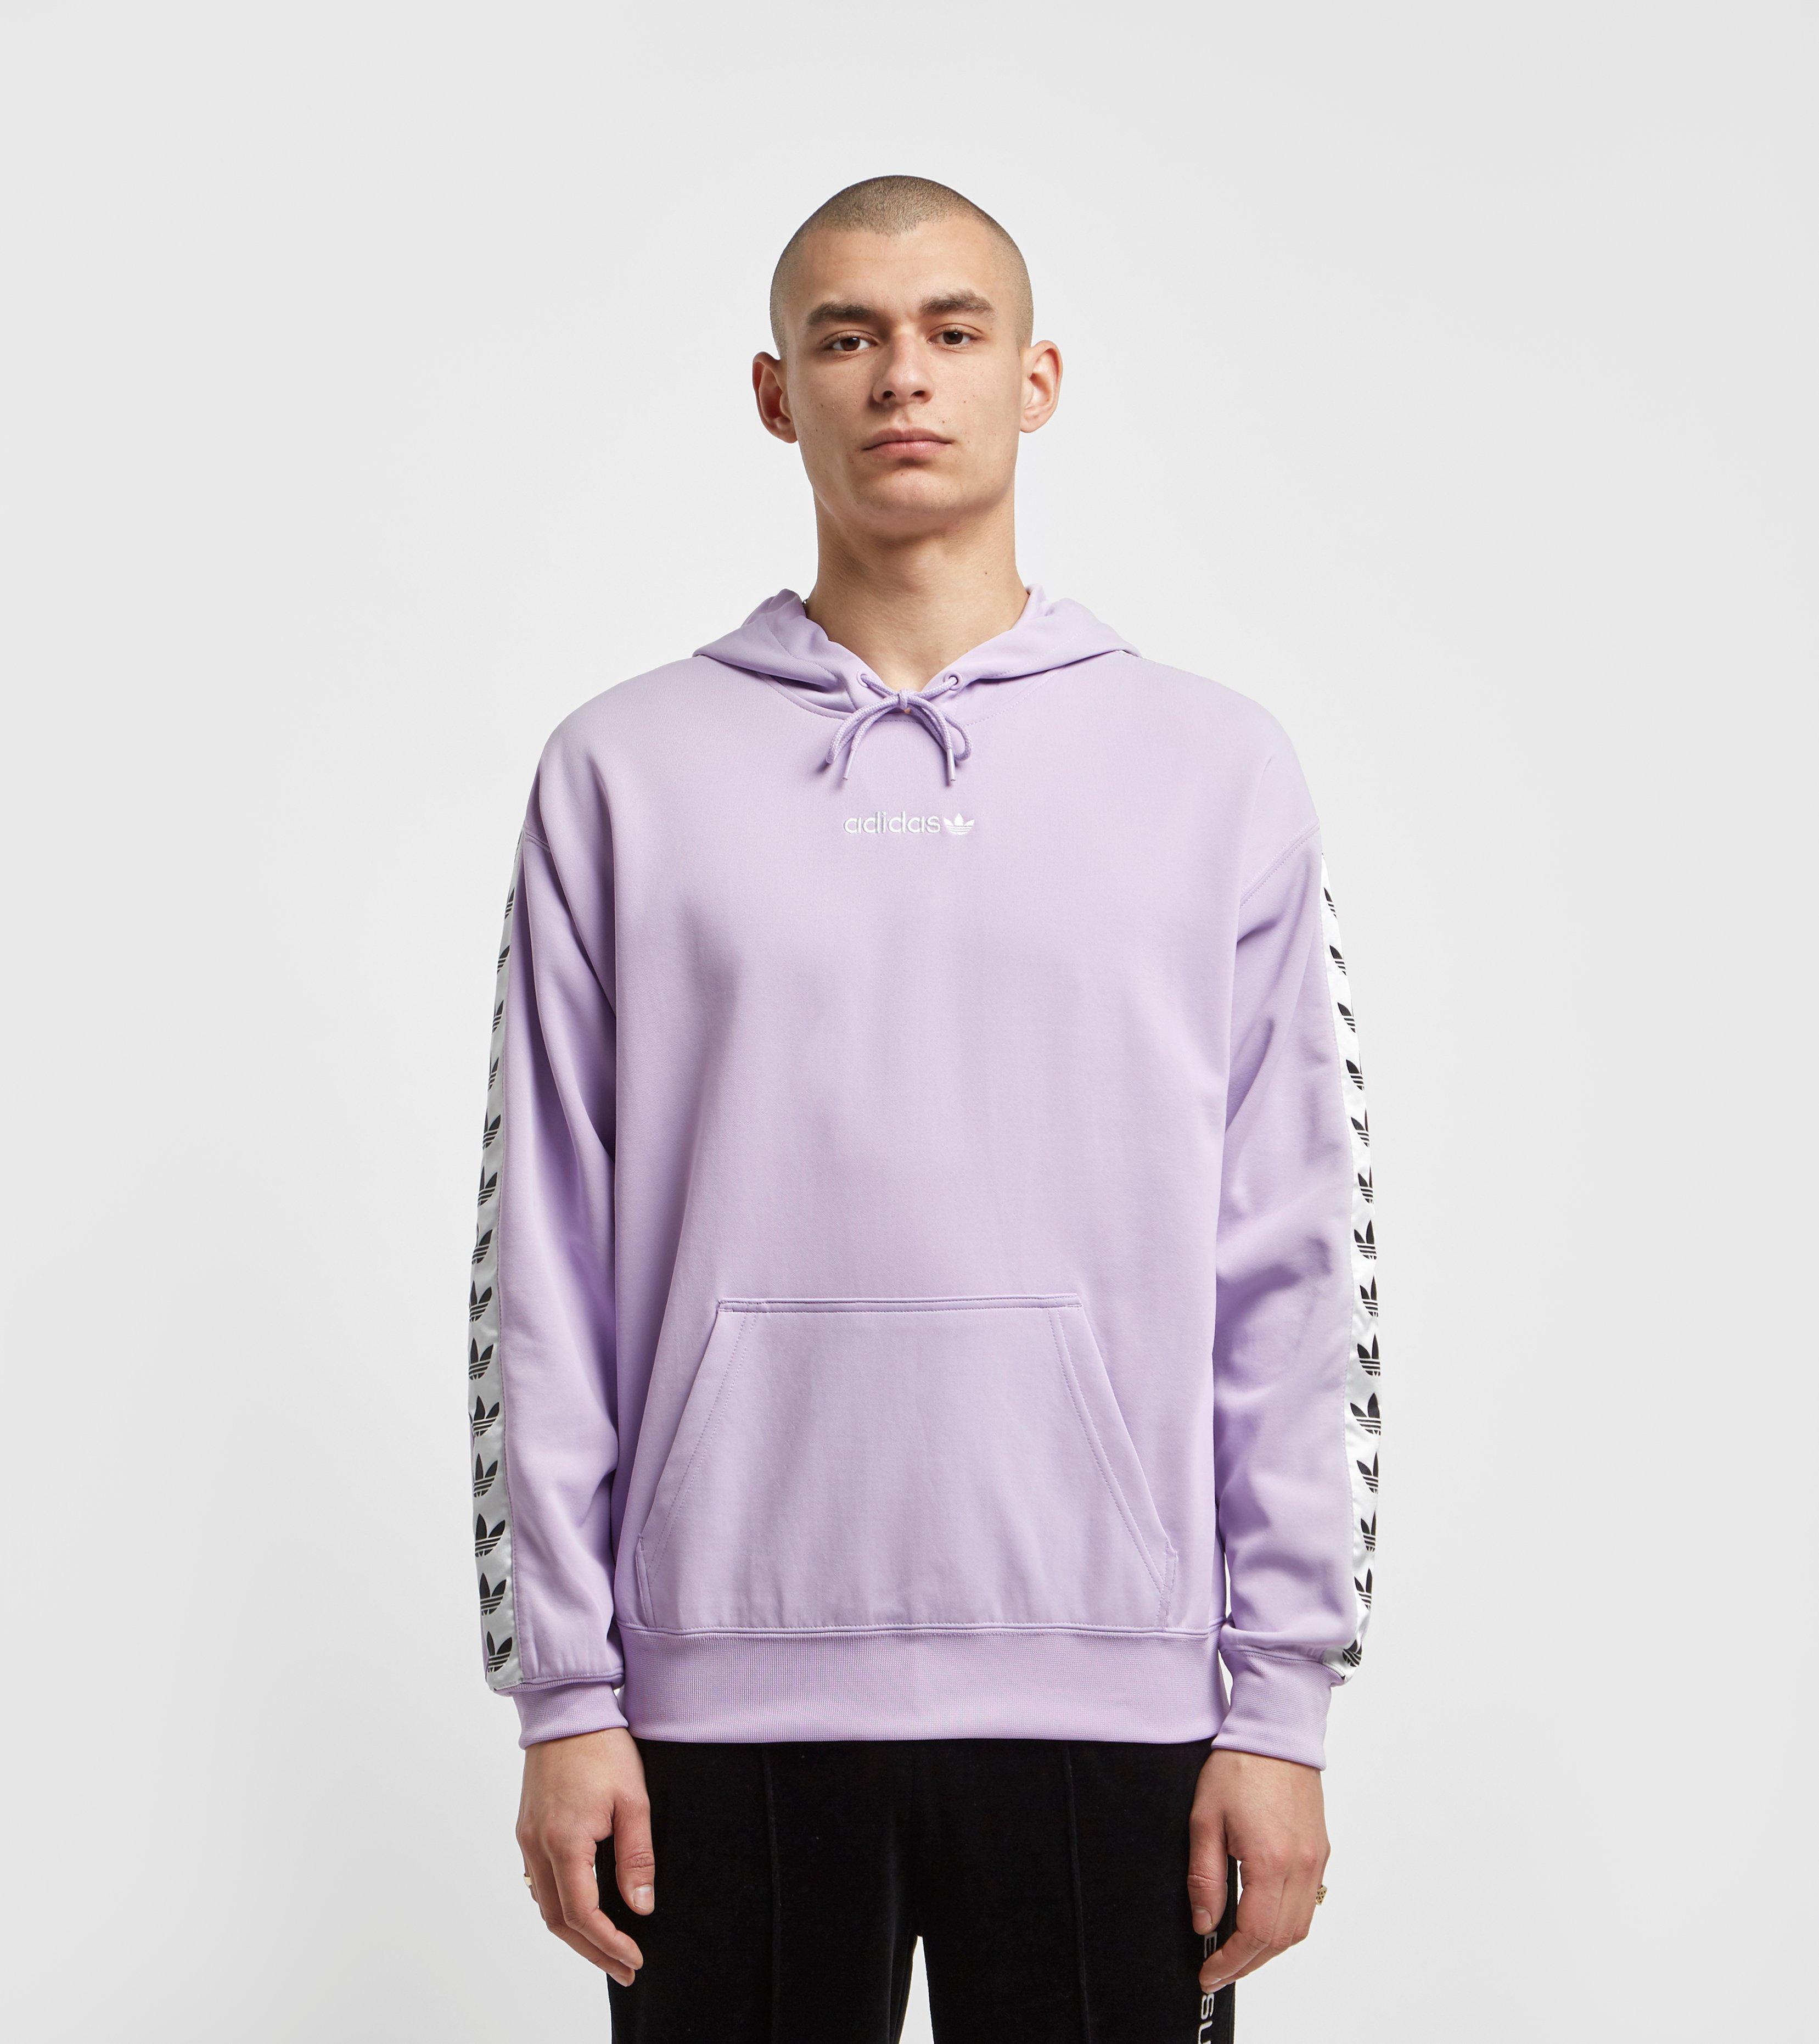 lavender adidas hoodie, Off 70%, www.scrimaglio.com